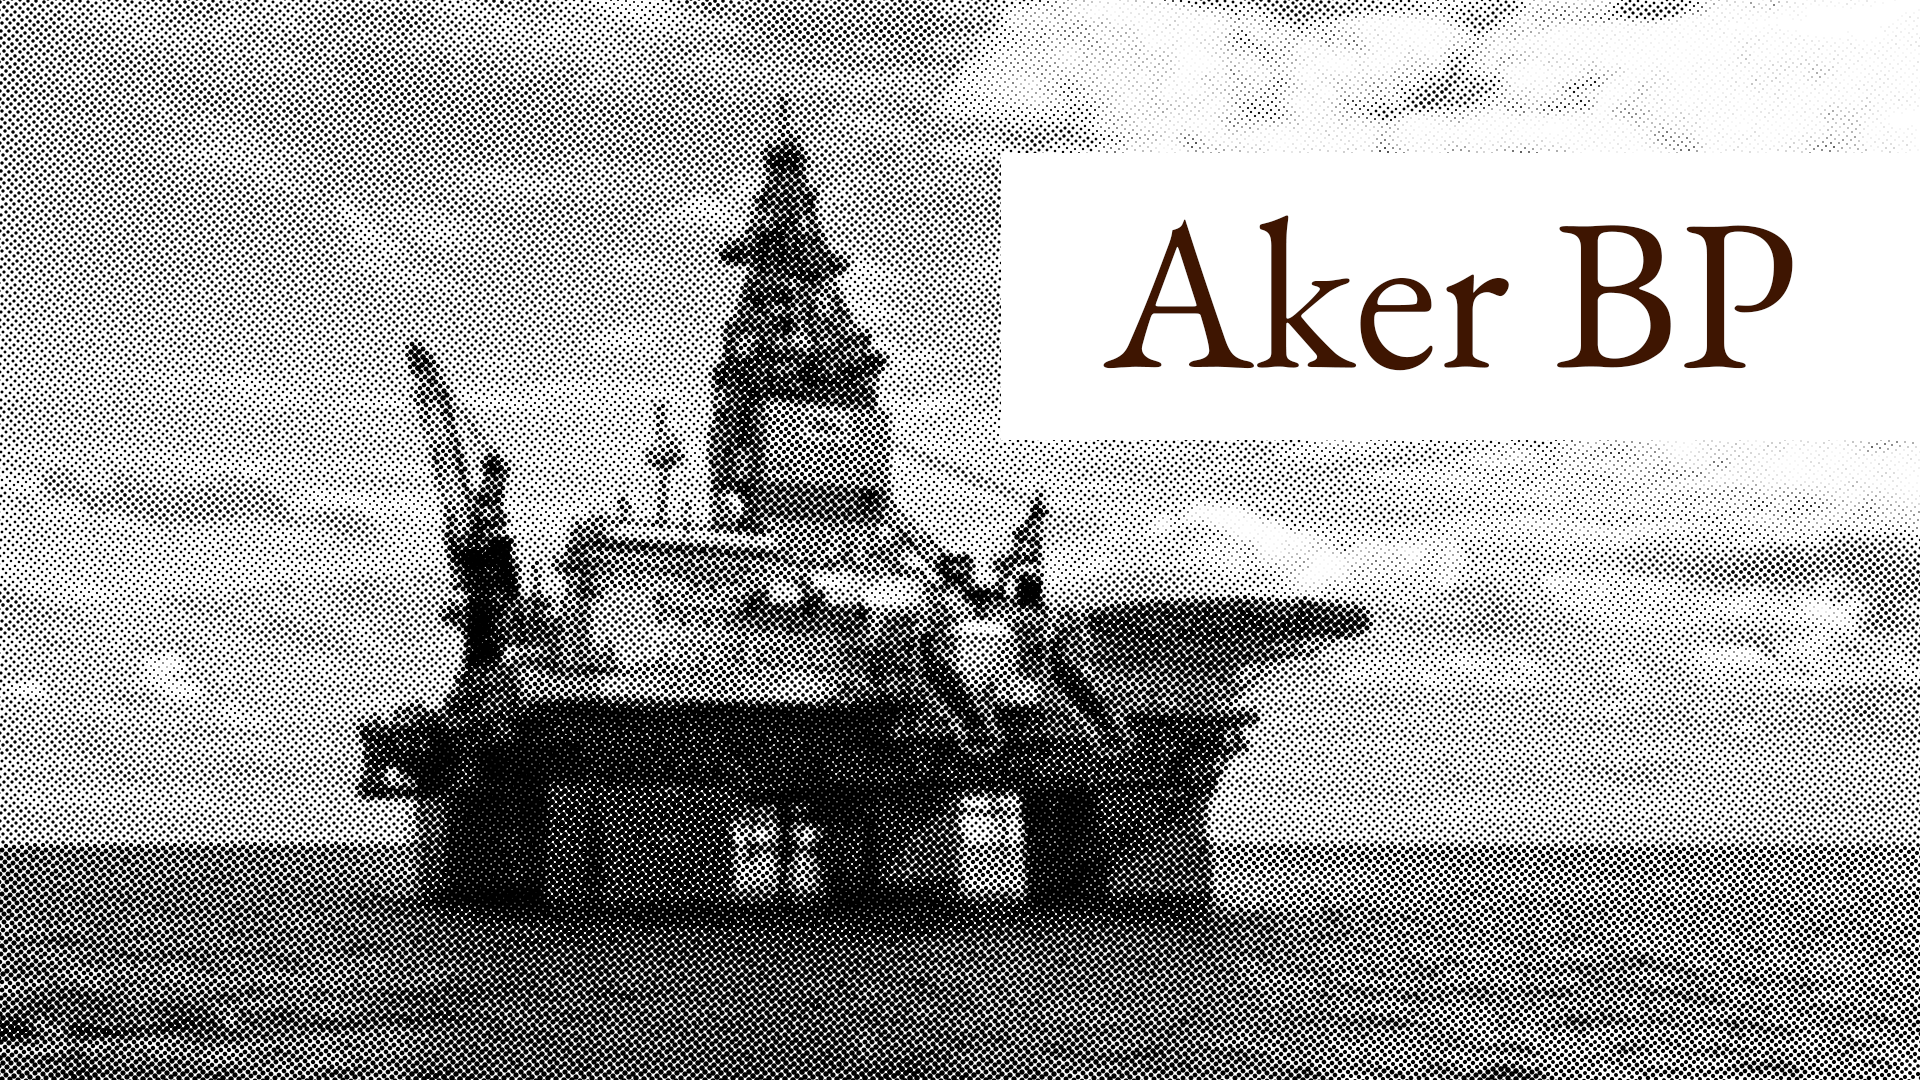 Aker BP: Oil rebels at good value